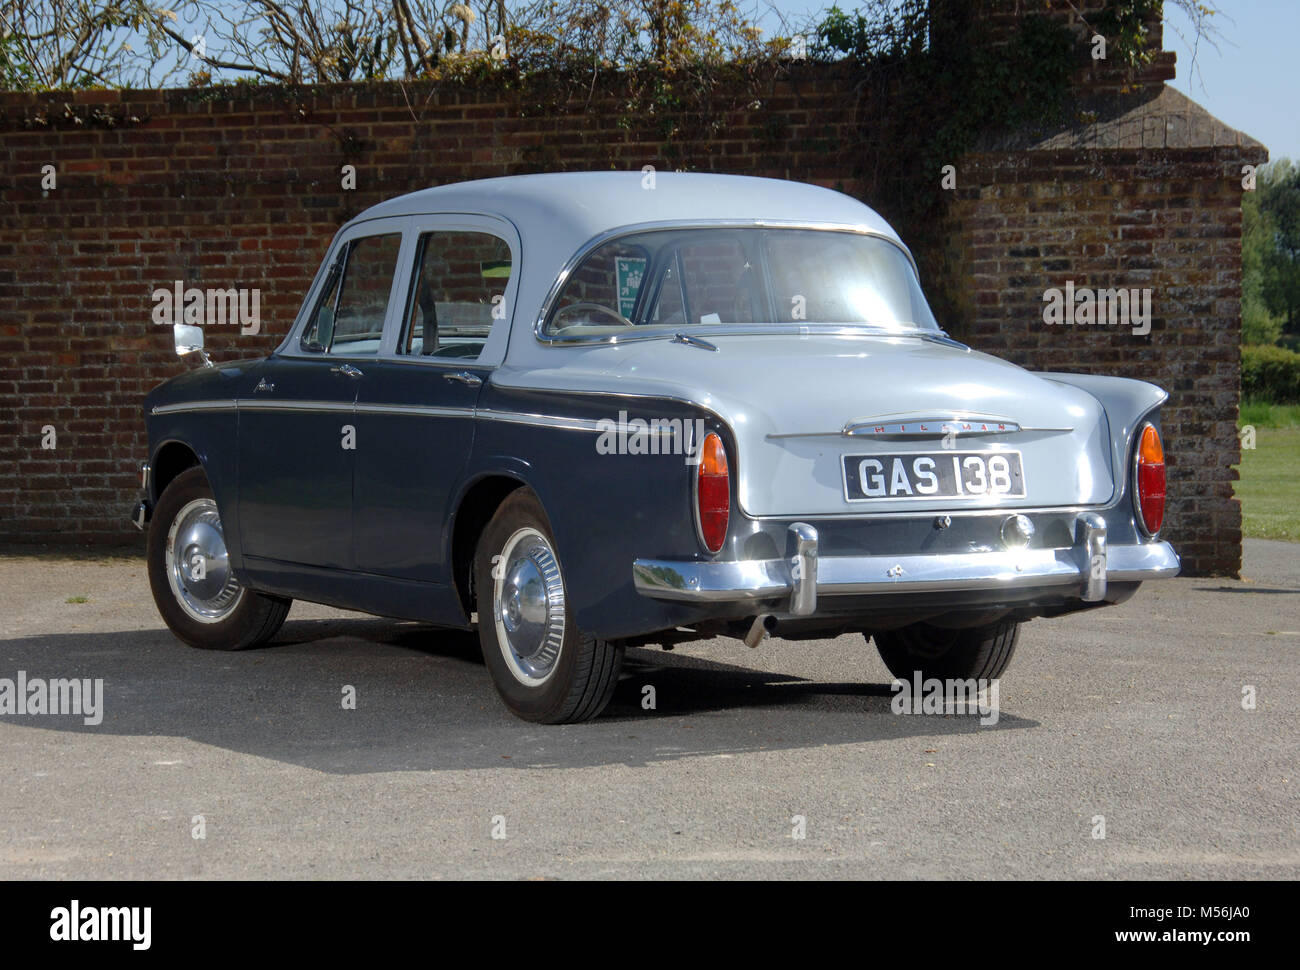 1961 Hillman Minx classic British family car Stock Photo